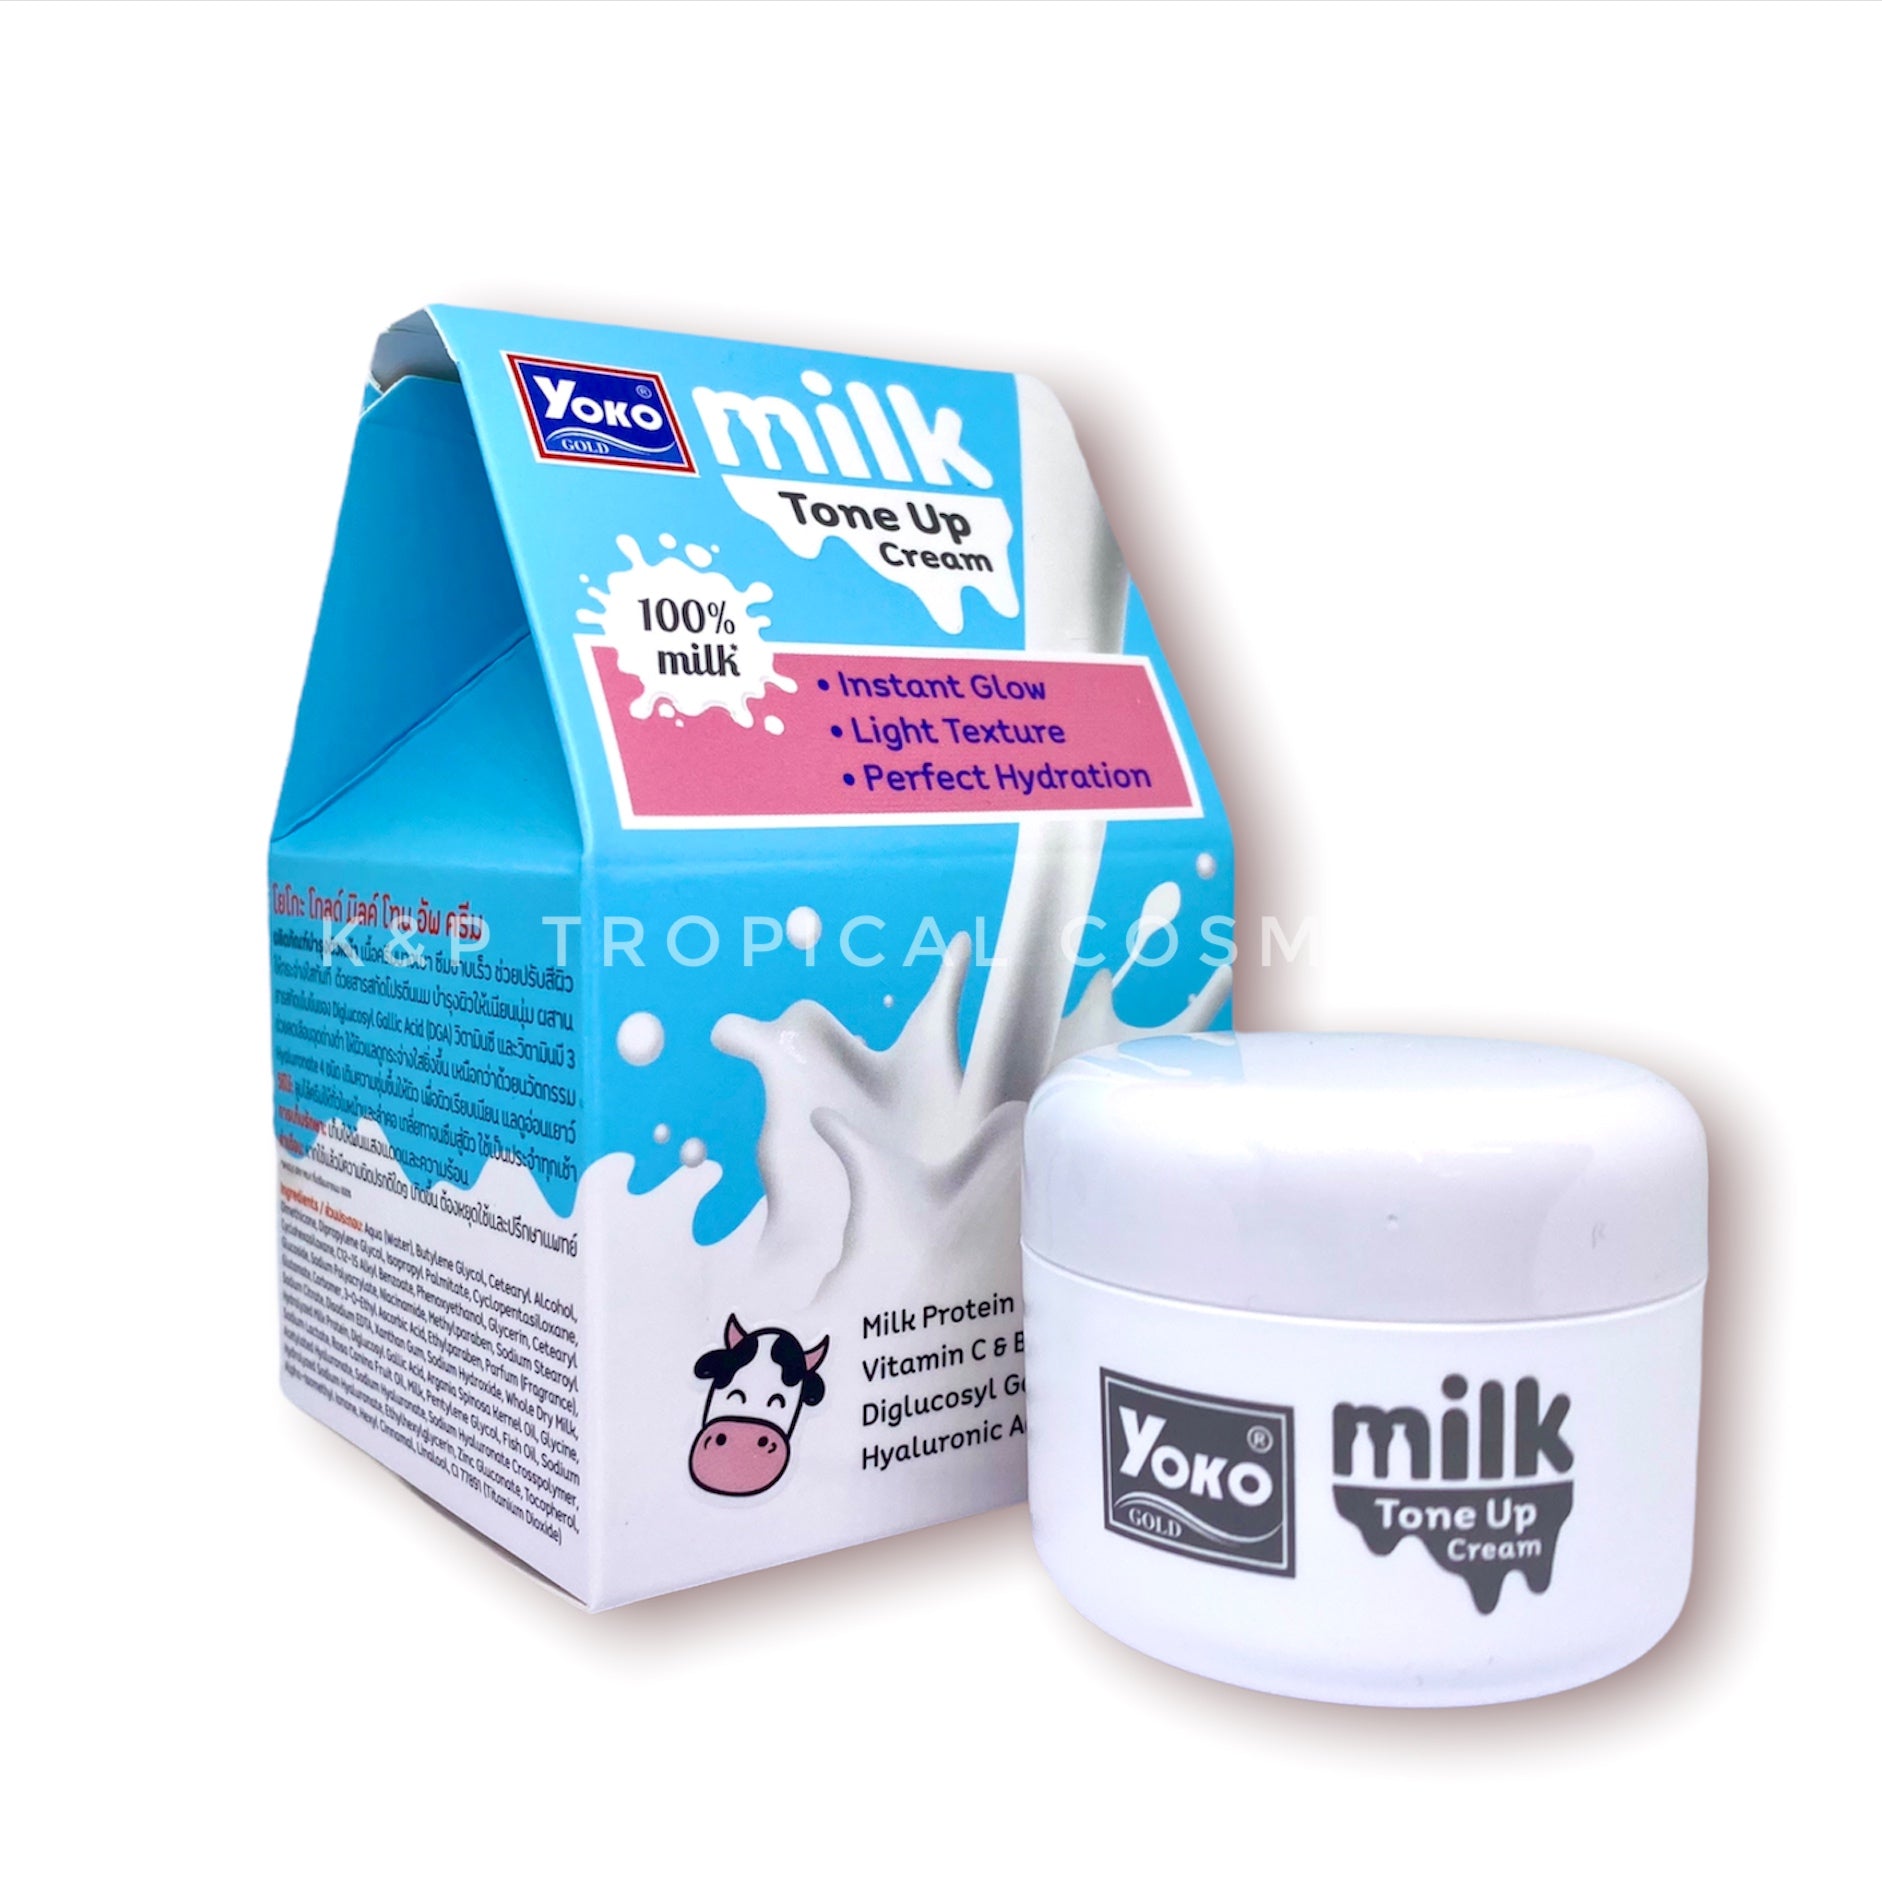 Siam Yoko Milk Tone Up Cream 20 g., Тонизирующий крем с молочным протеином 20 гр.